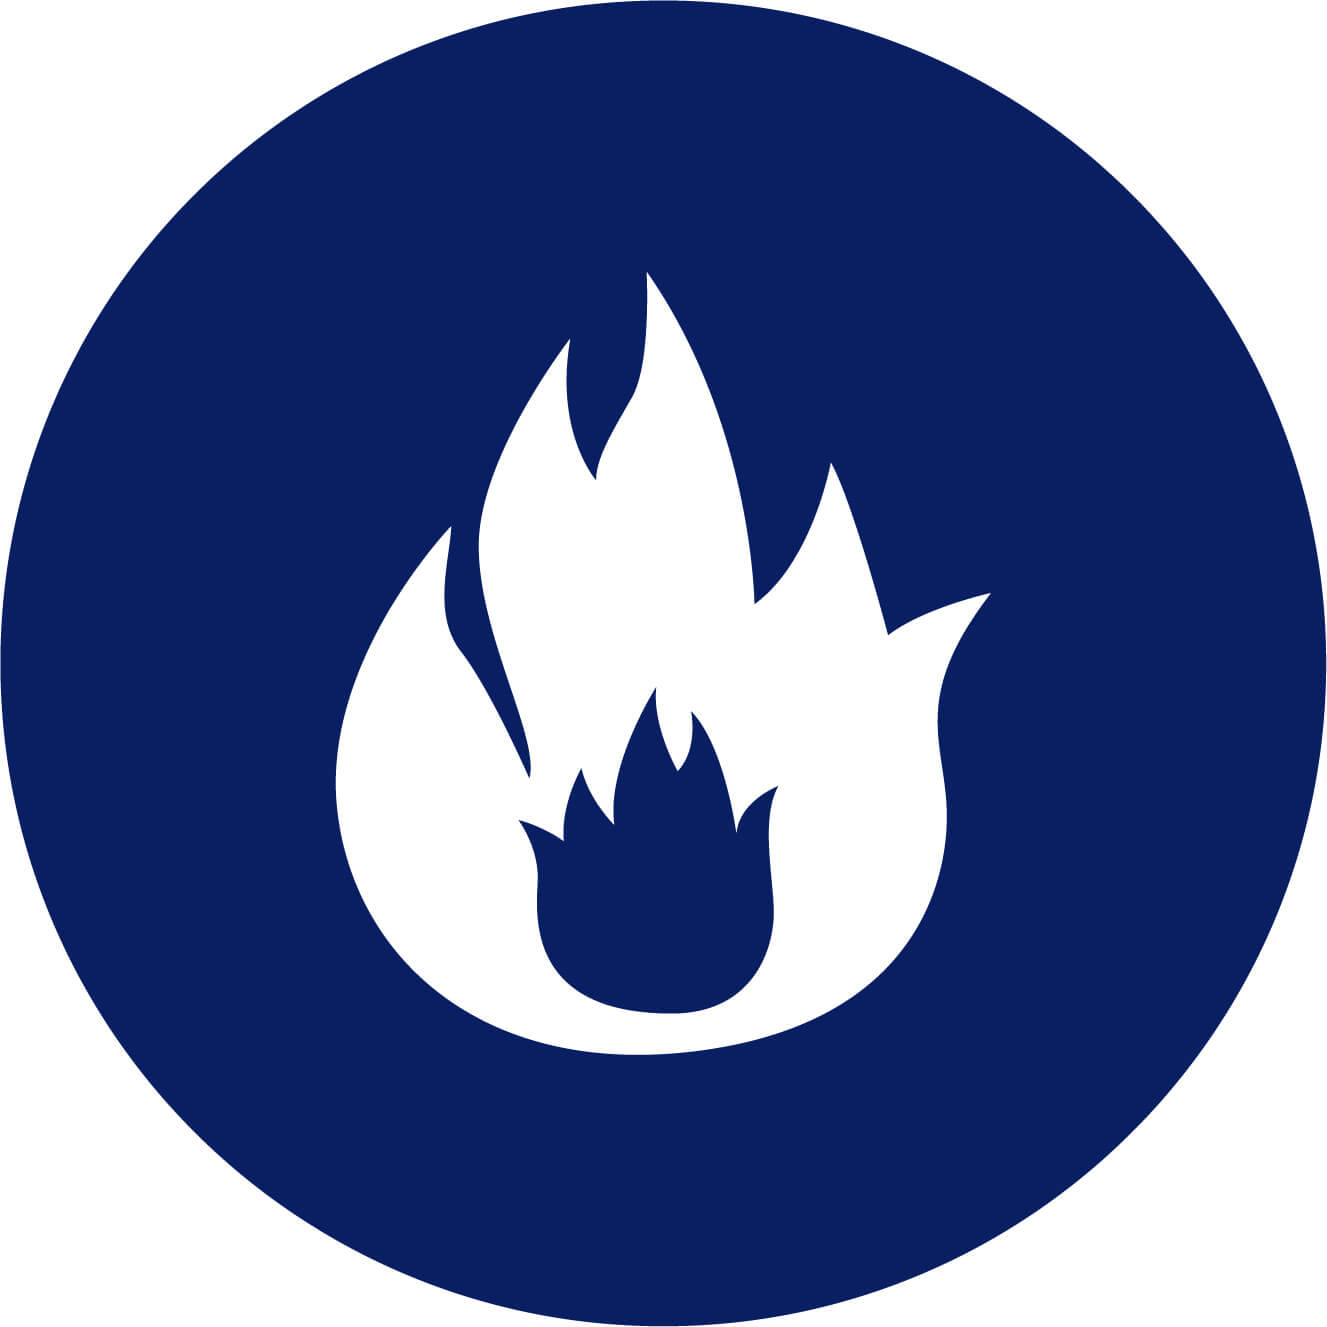 furnace icon